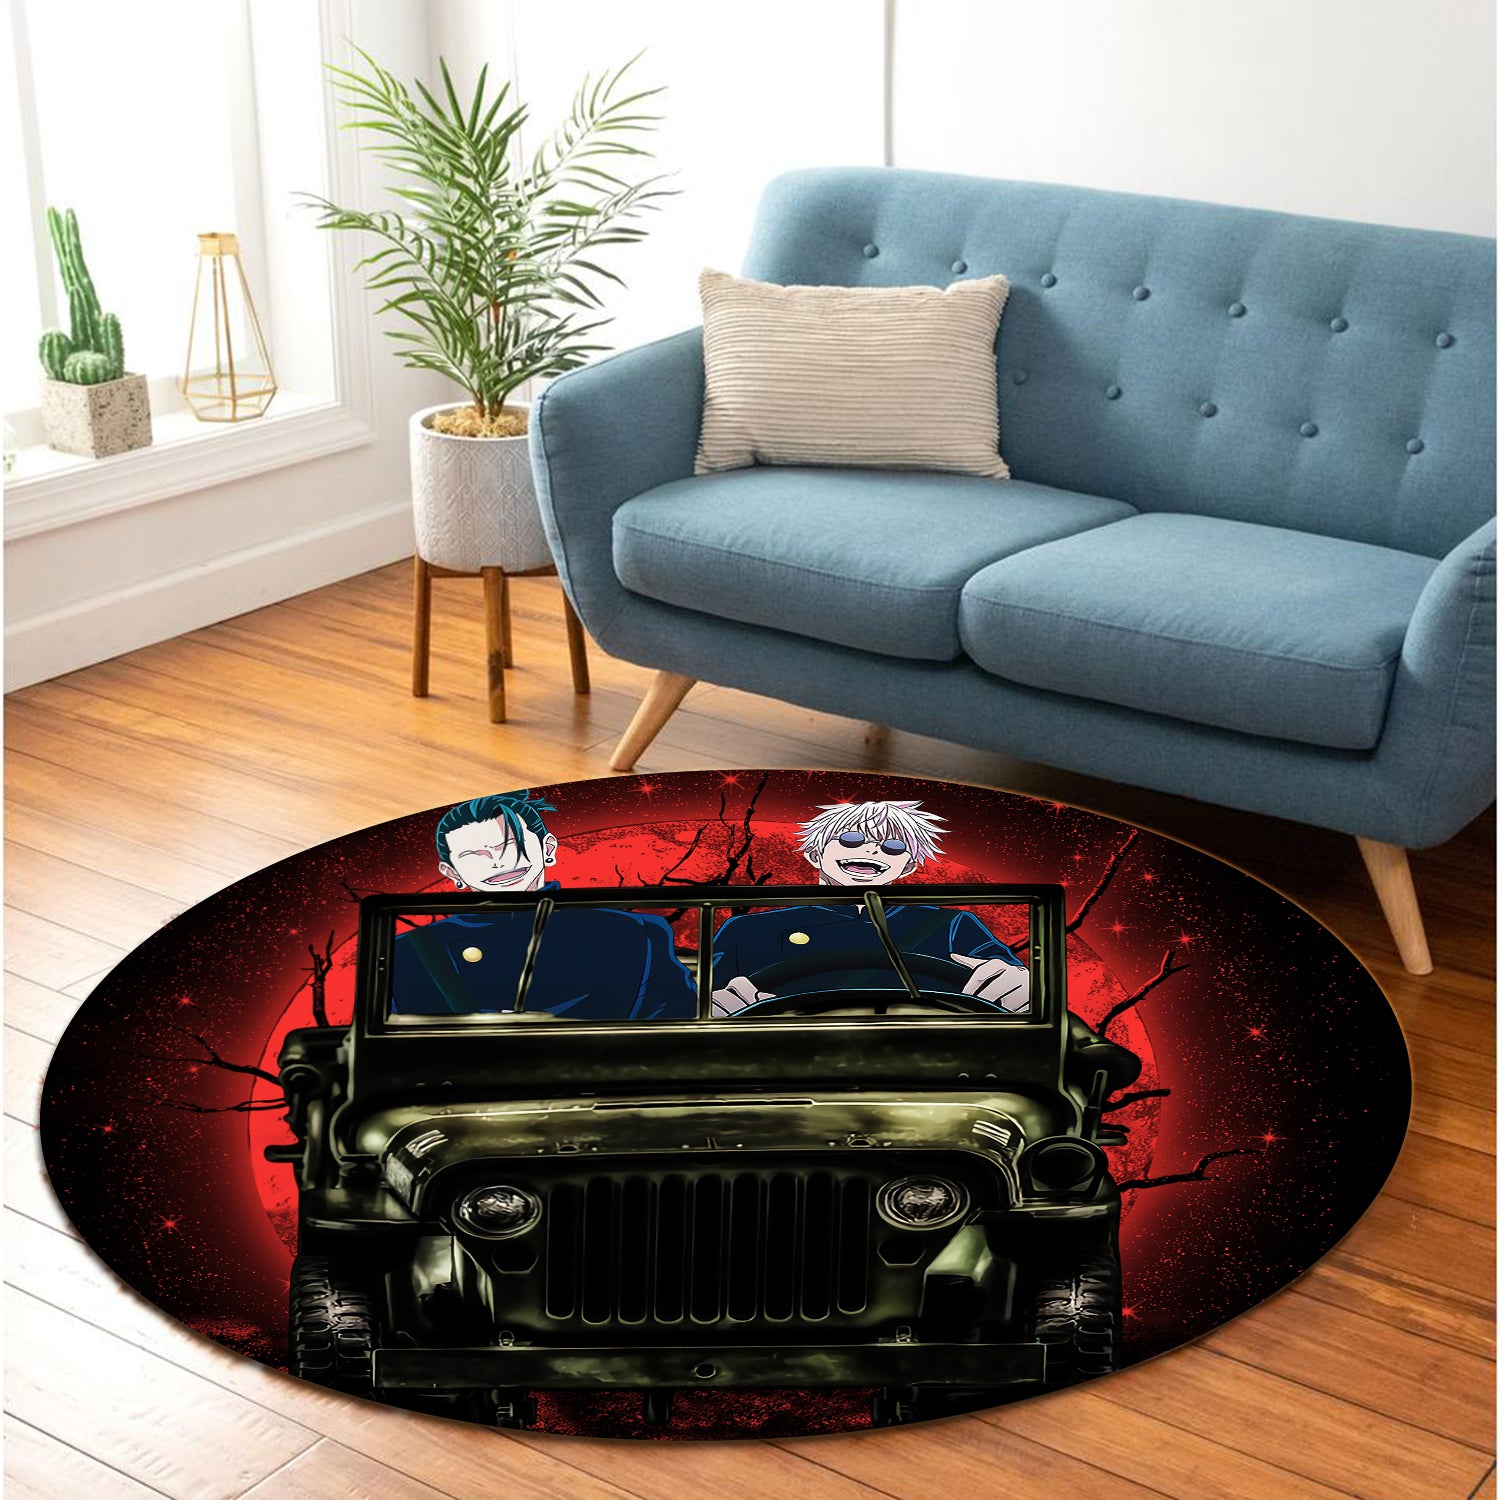 Gojo Geto Jujutsu Kaisen Ride Jeep Moonlight Halloween Round Carpet Rug Bedroom Livingroom Home Decor Nearkii